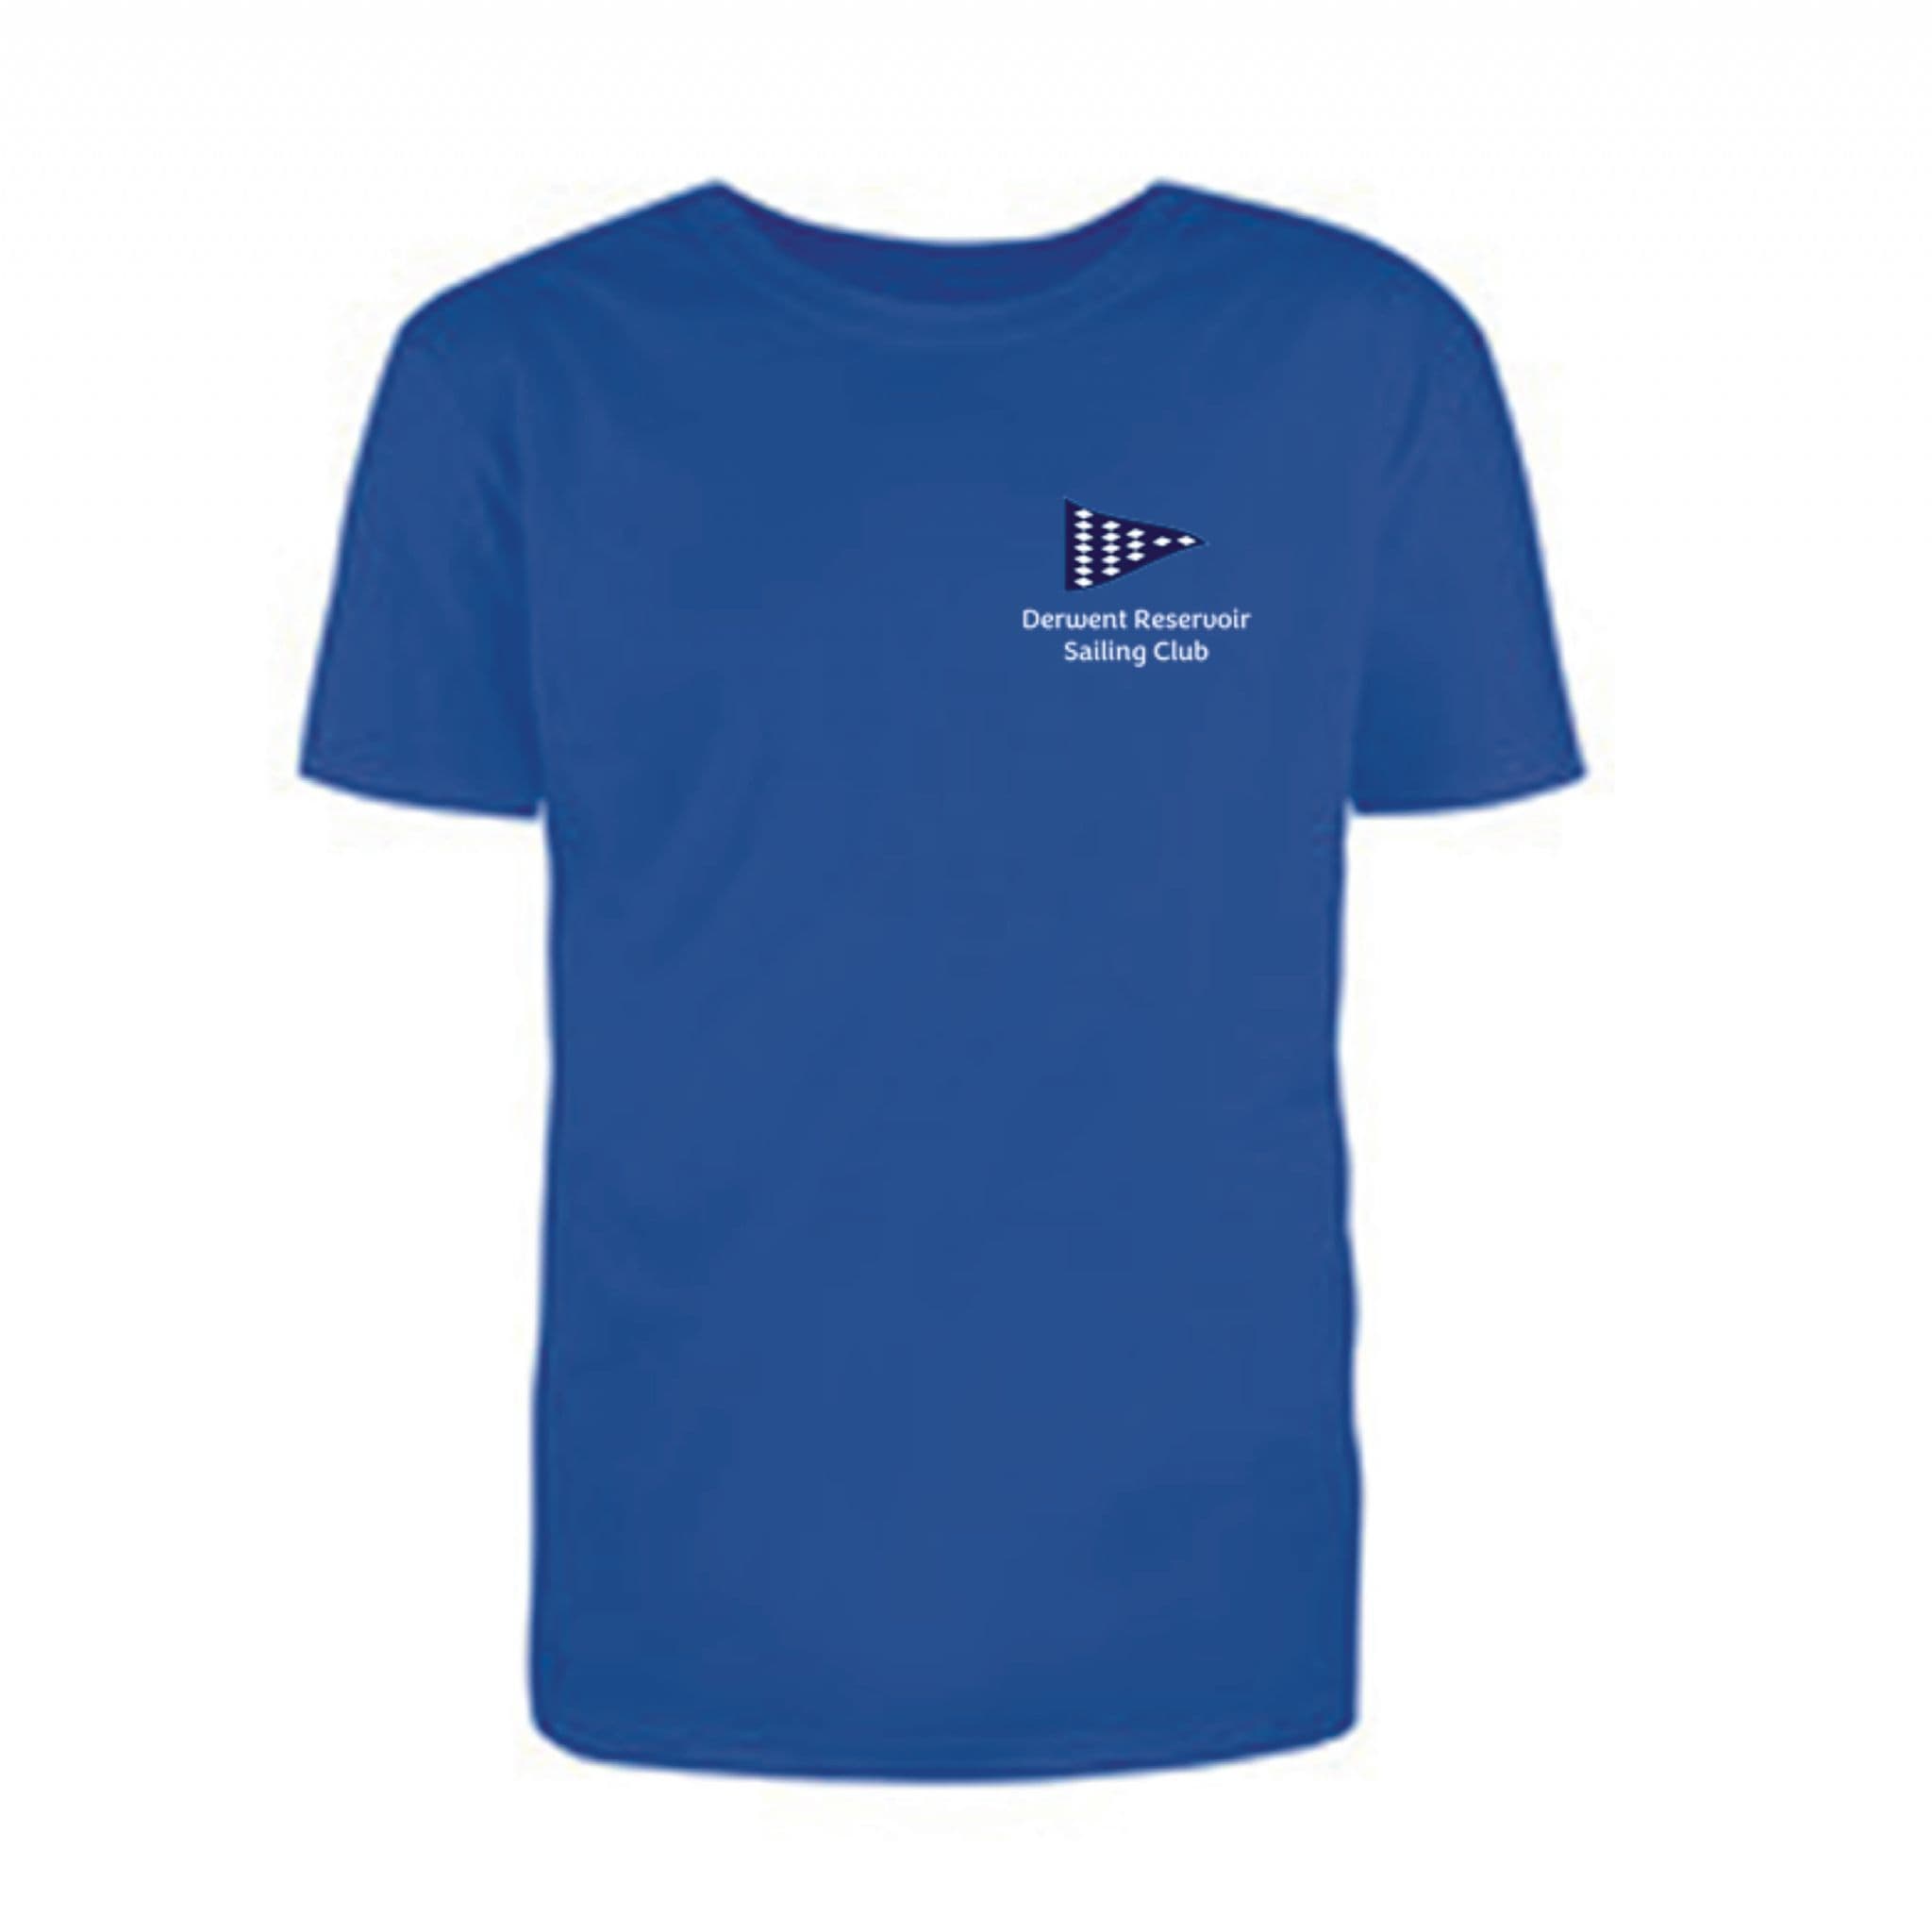 Derwent Reservoir Sailing Club Sapphire T-Shirt JC001